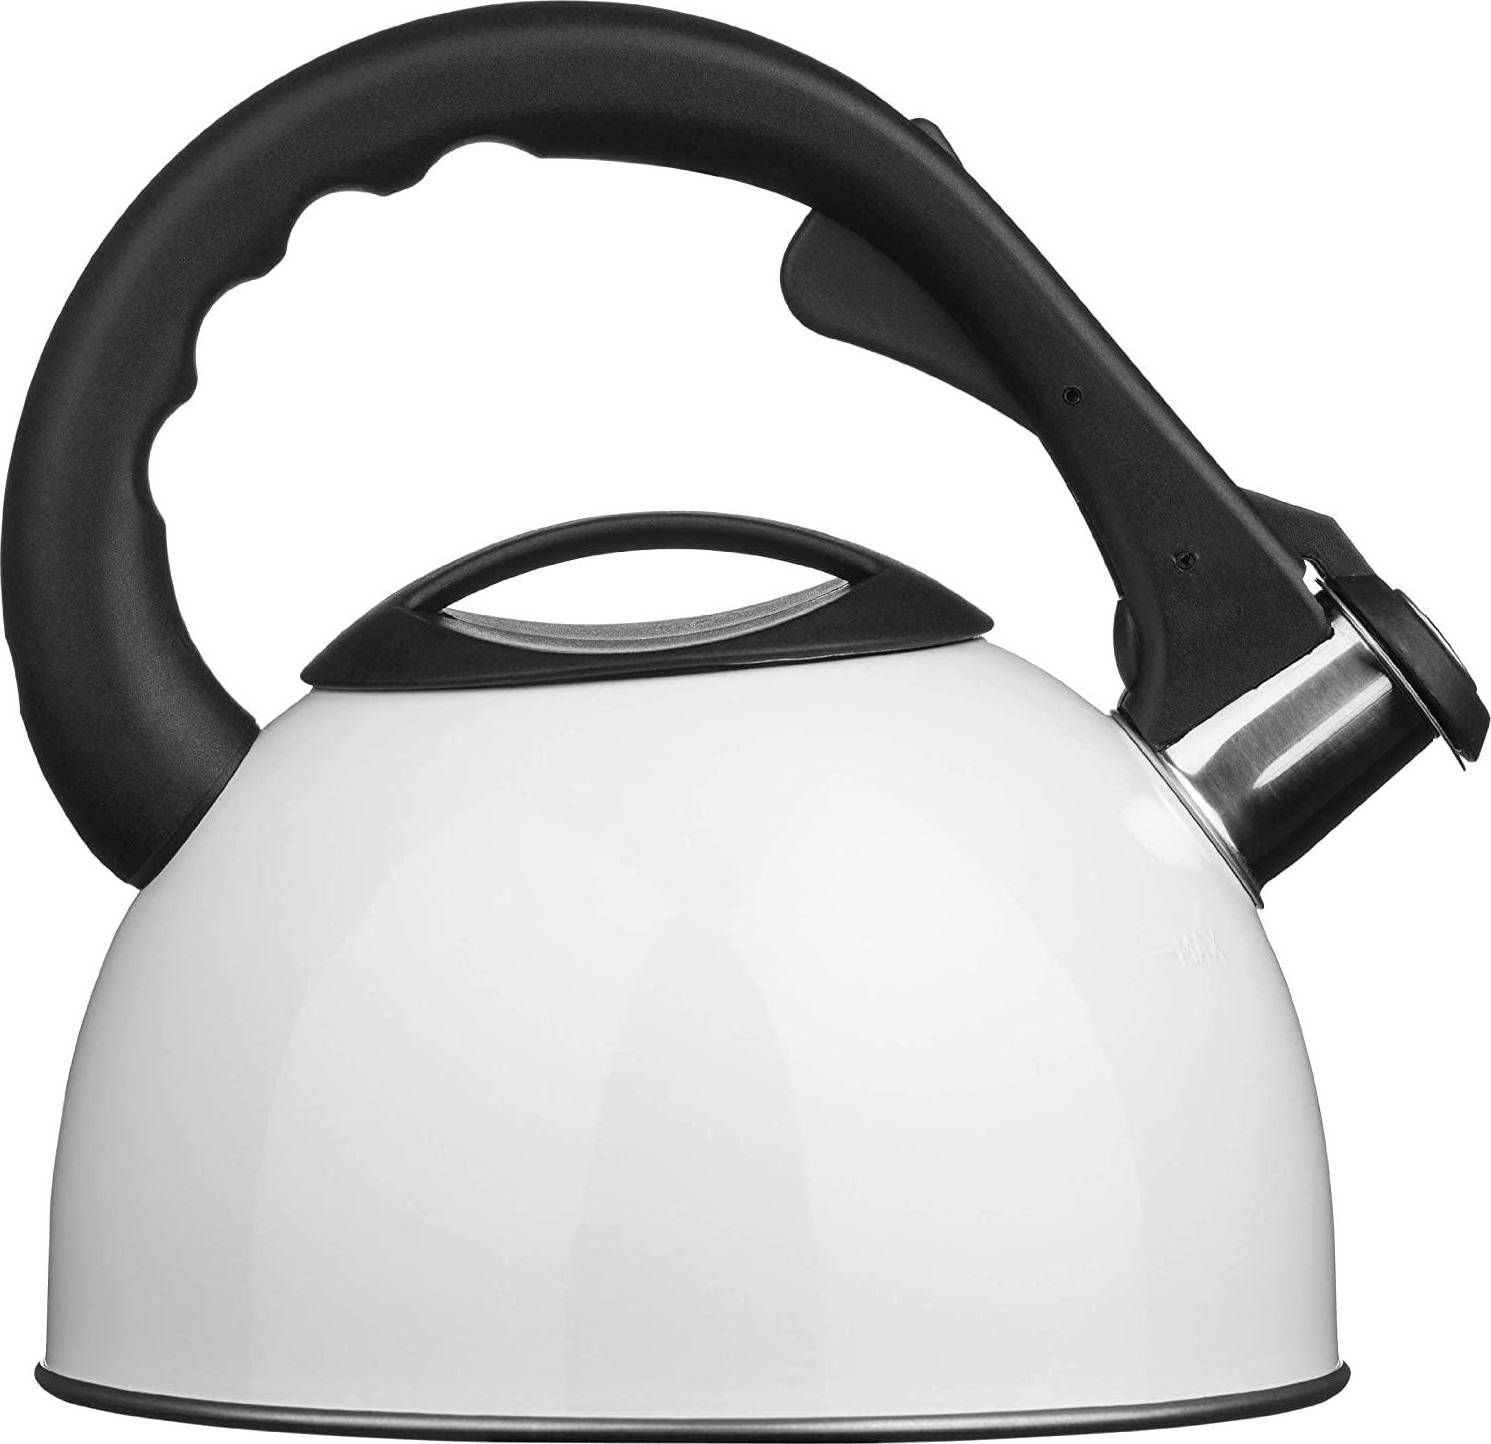 Travel kettle Premier Housewares Whistling Kettle 2.5L